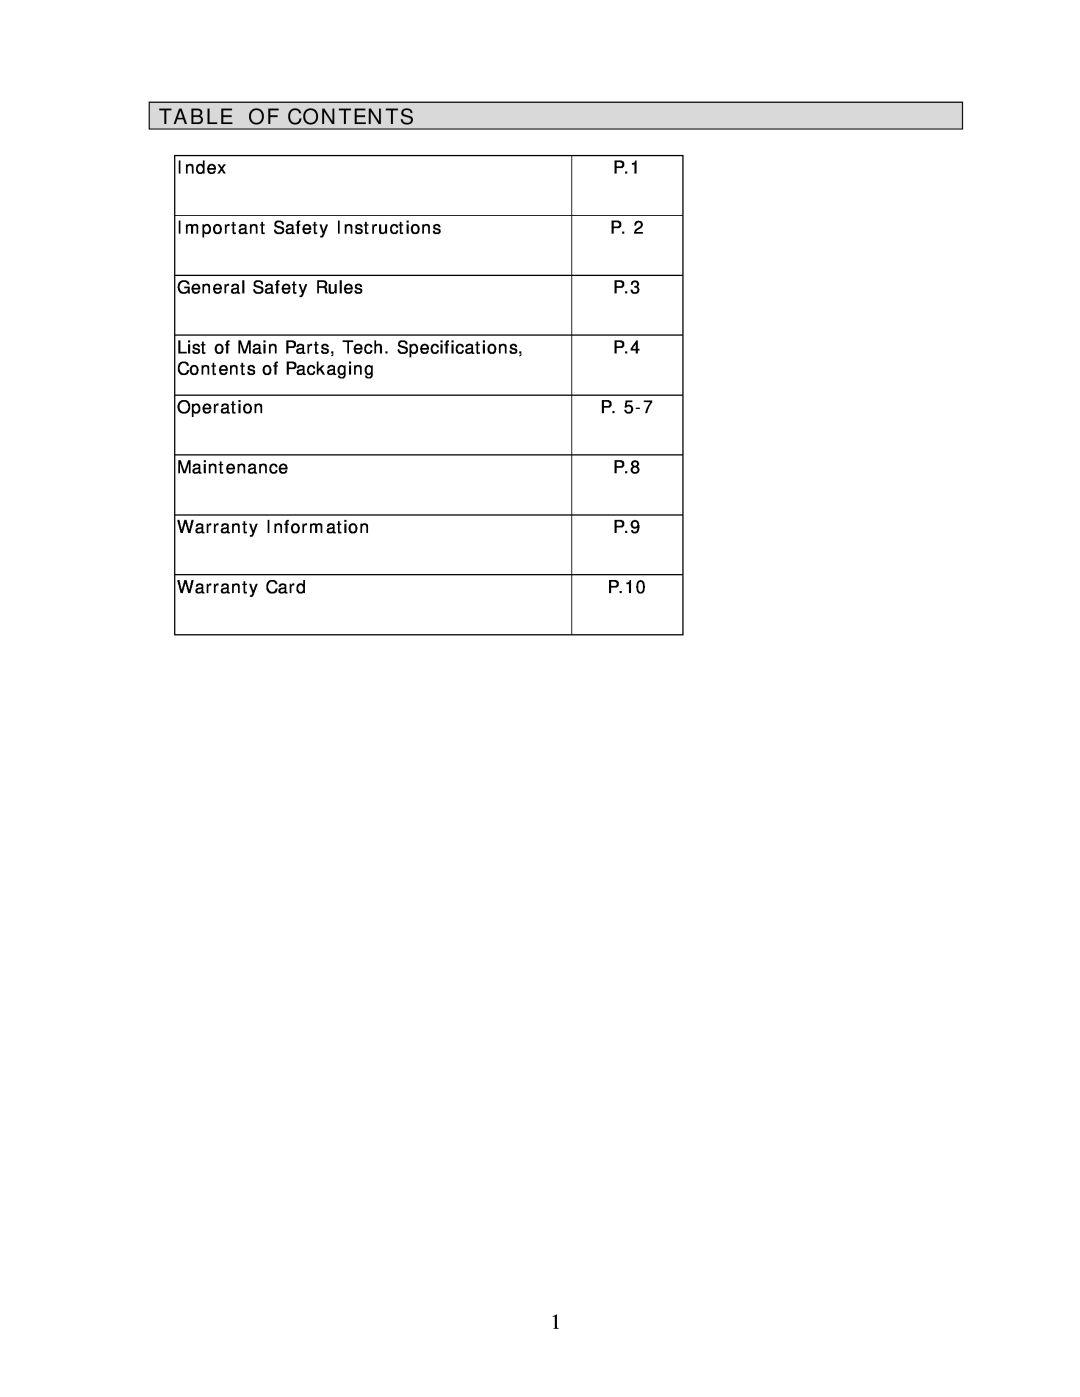 Wachsmuth & Krogmann TSK-941 SSN manual Table Of Contents 